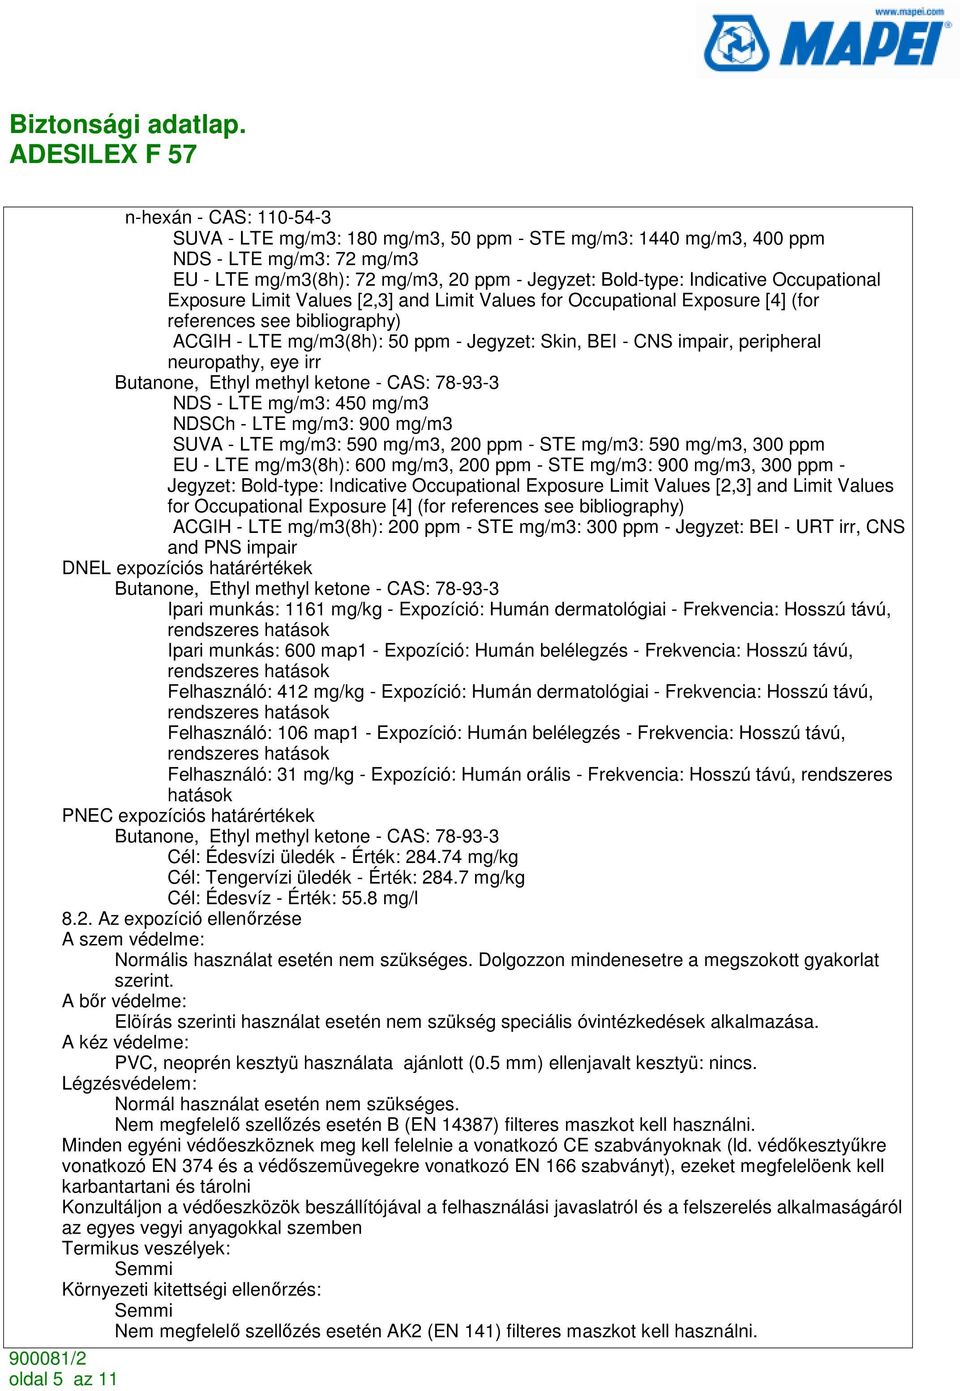 neuropathy, eye irr Butanone, Ethyl methyl ketone - CAS: 78-93-3 NDS - LTE mg/m3: 450 mg/m3 NDSCh - LTE mg/m3: 900 mg/m3 SUVA - LTE mg/m3: 590 mg/m3, 200 ppm - STE mg/m3: 590 mg/m3, 300 ppm EU - LTE